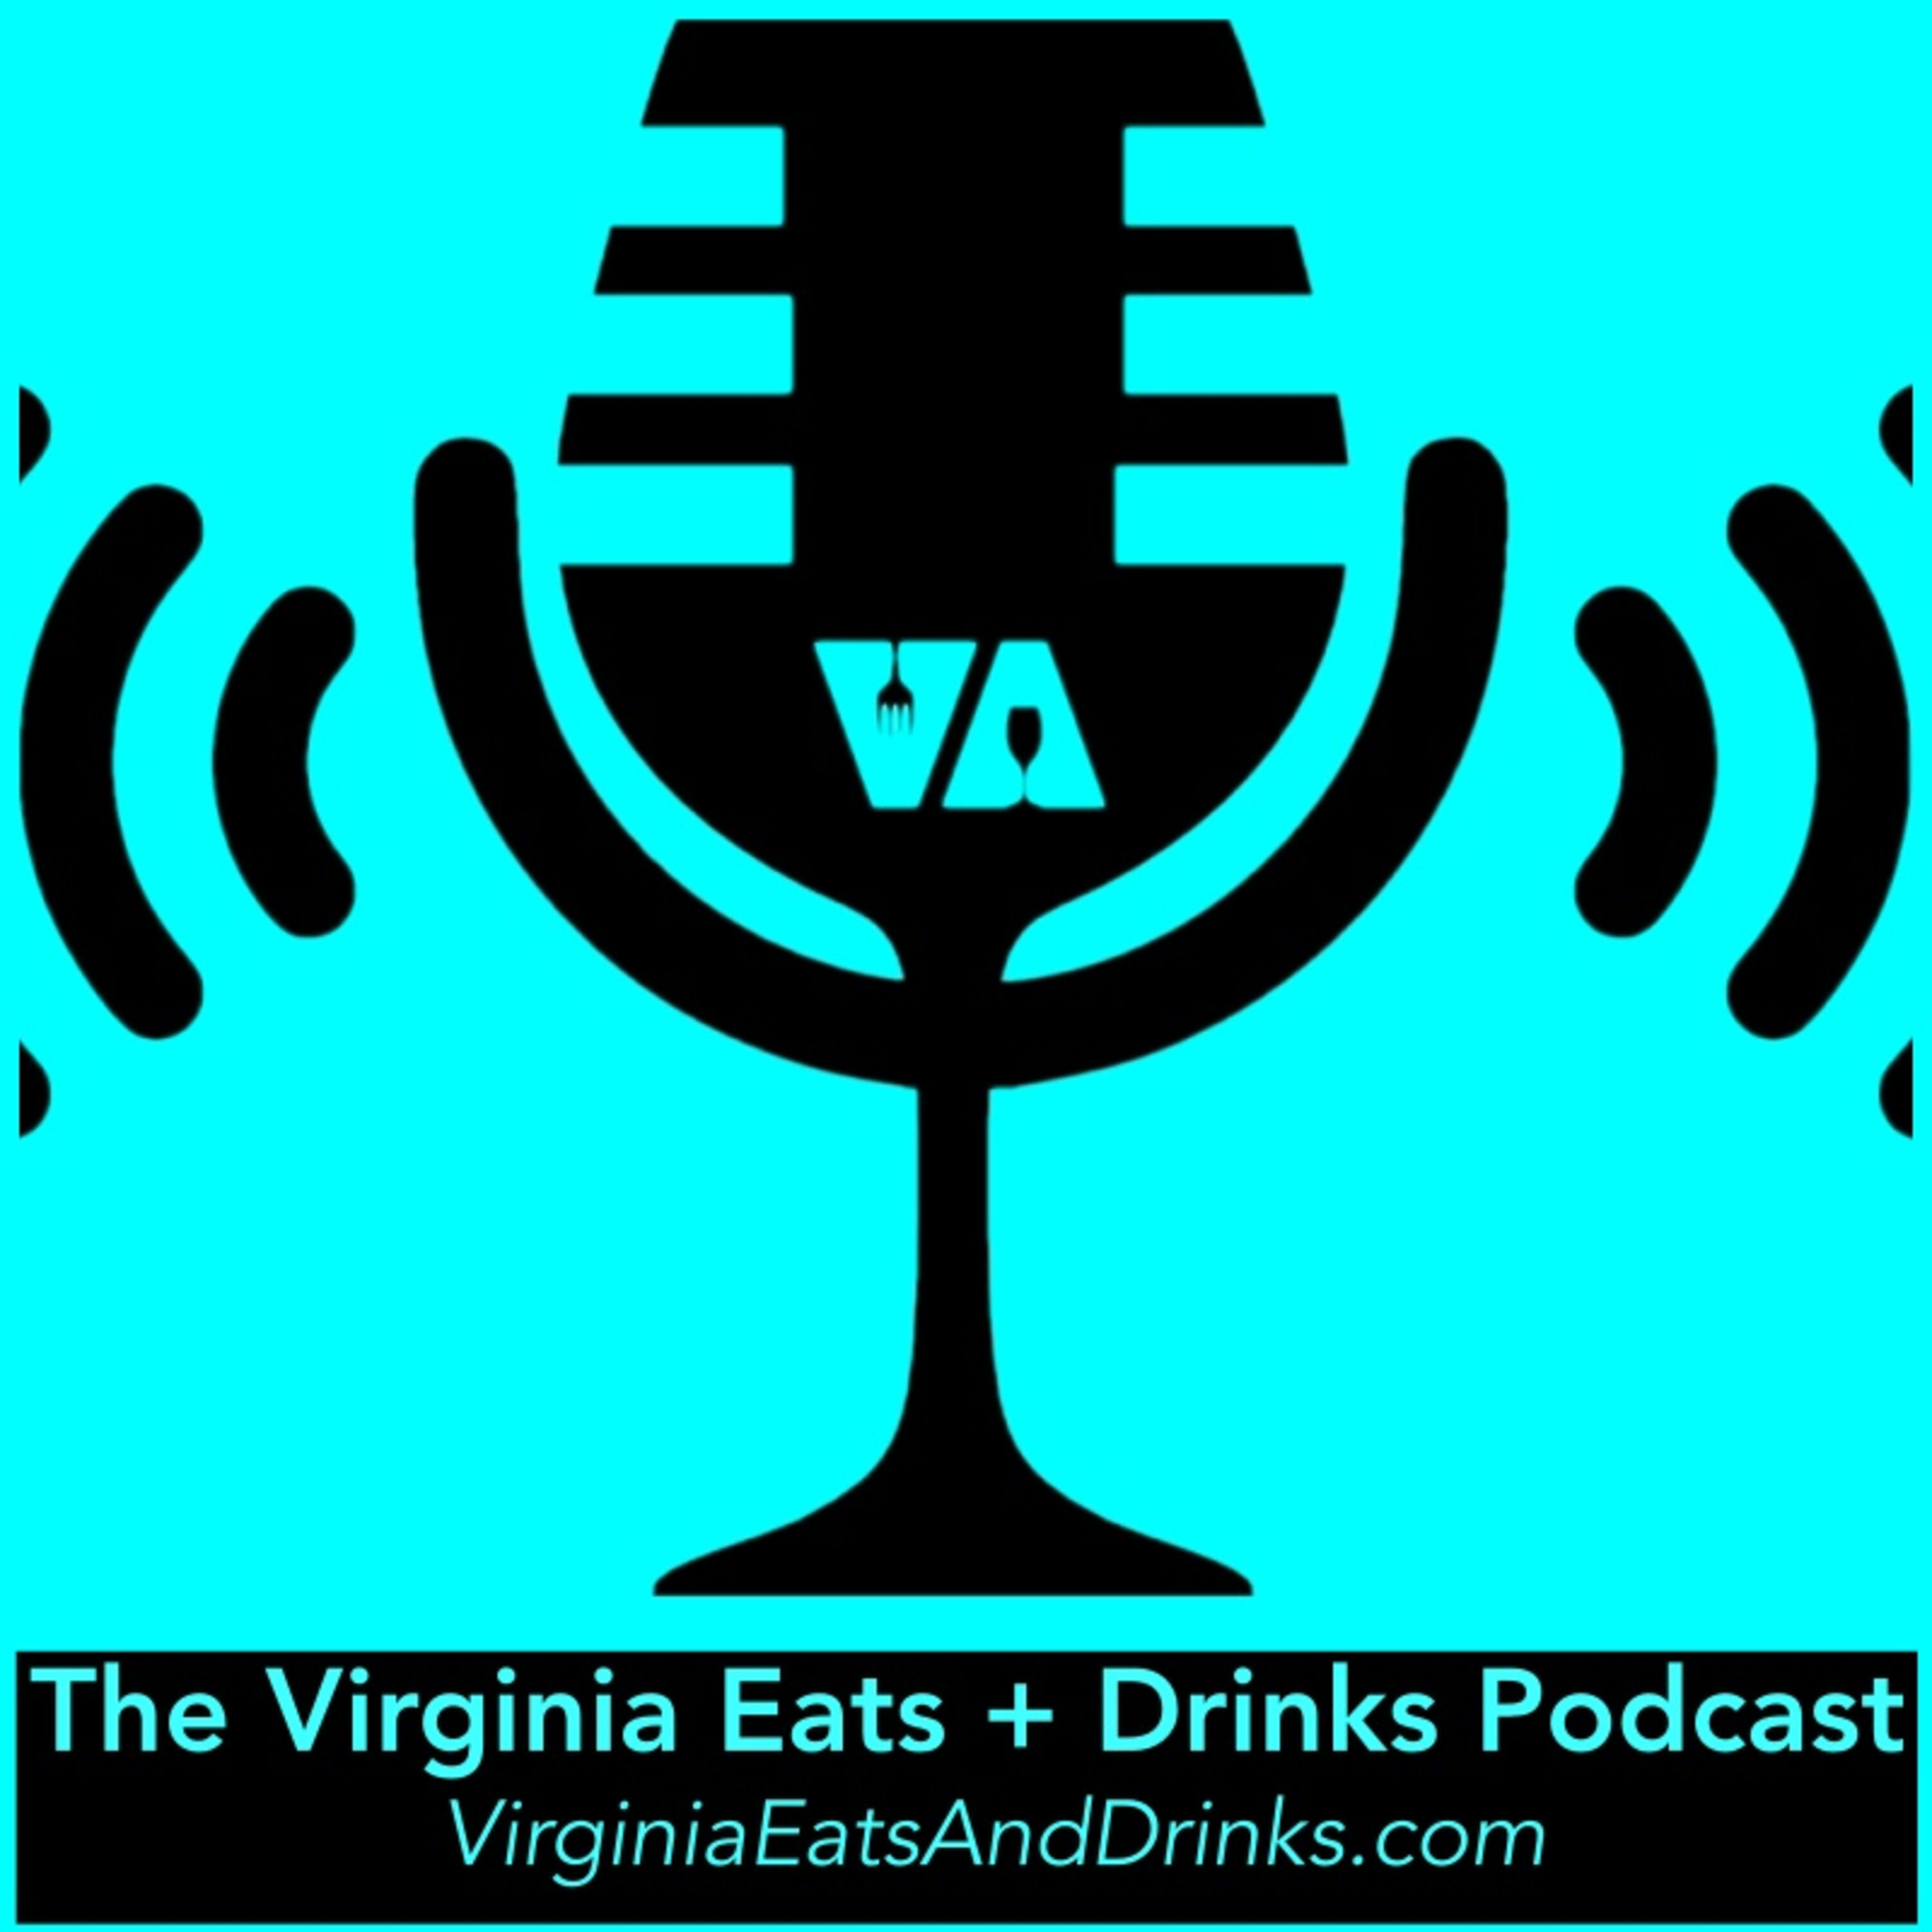 The Virginia Eats & Drinks Podcast